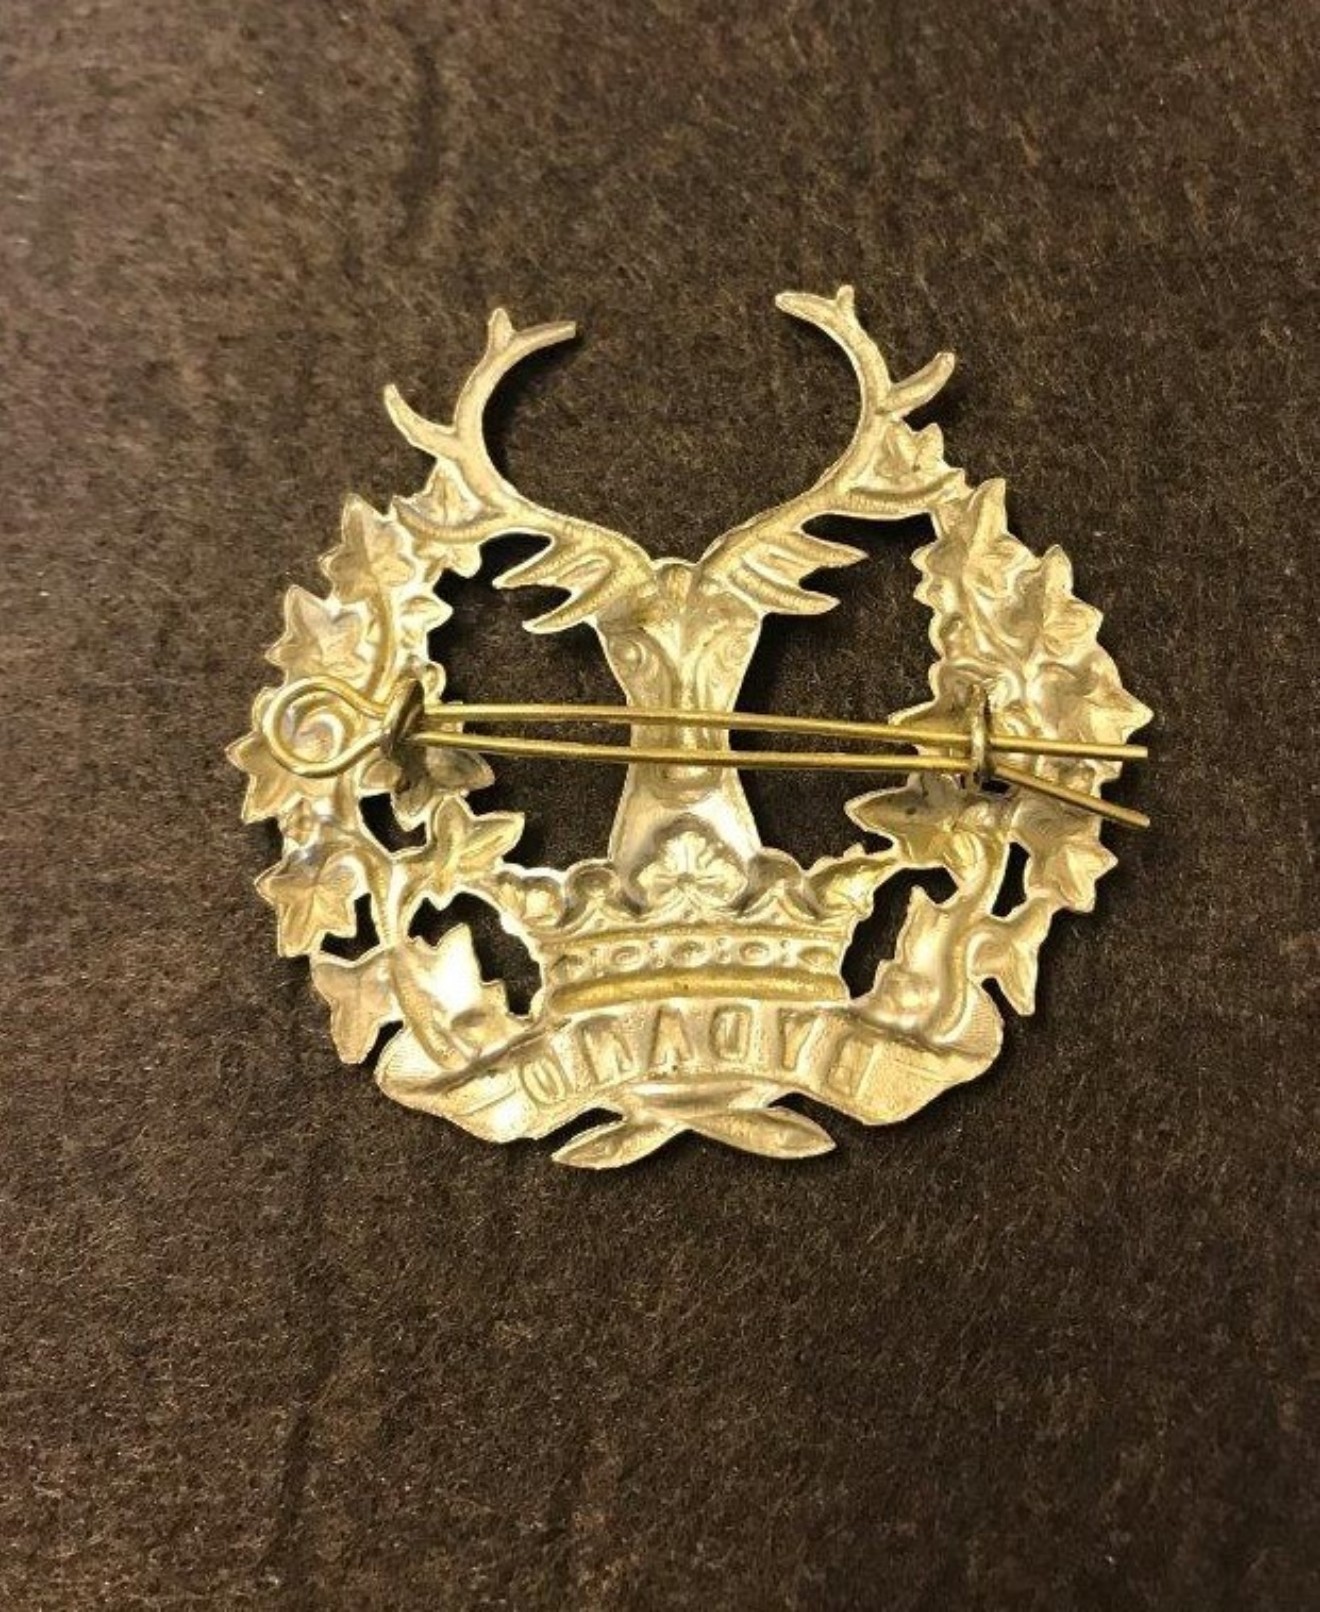 Vintage White Metal Gordon Highlanders Cap Badge Inscribed "Bydand"